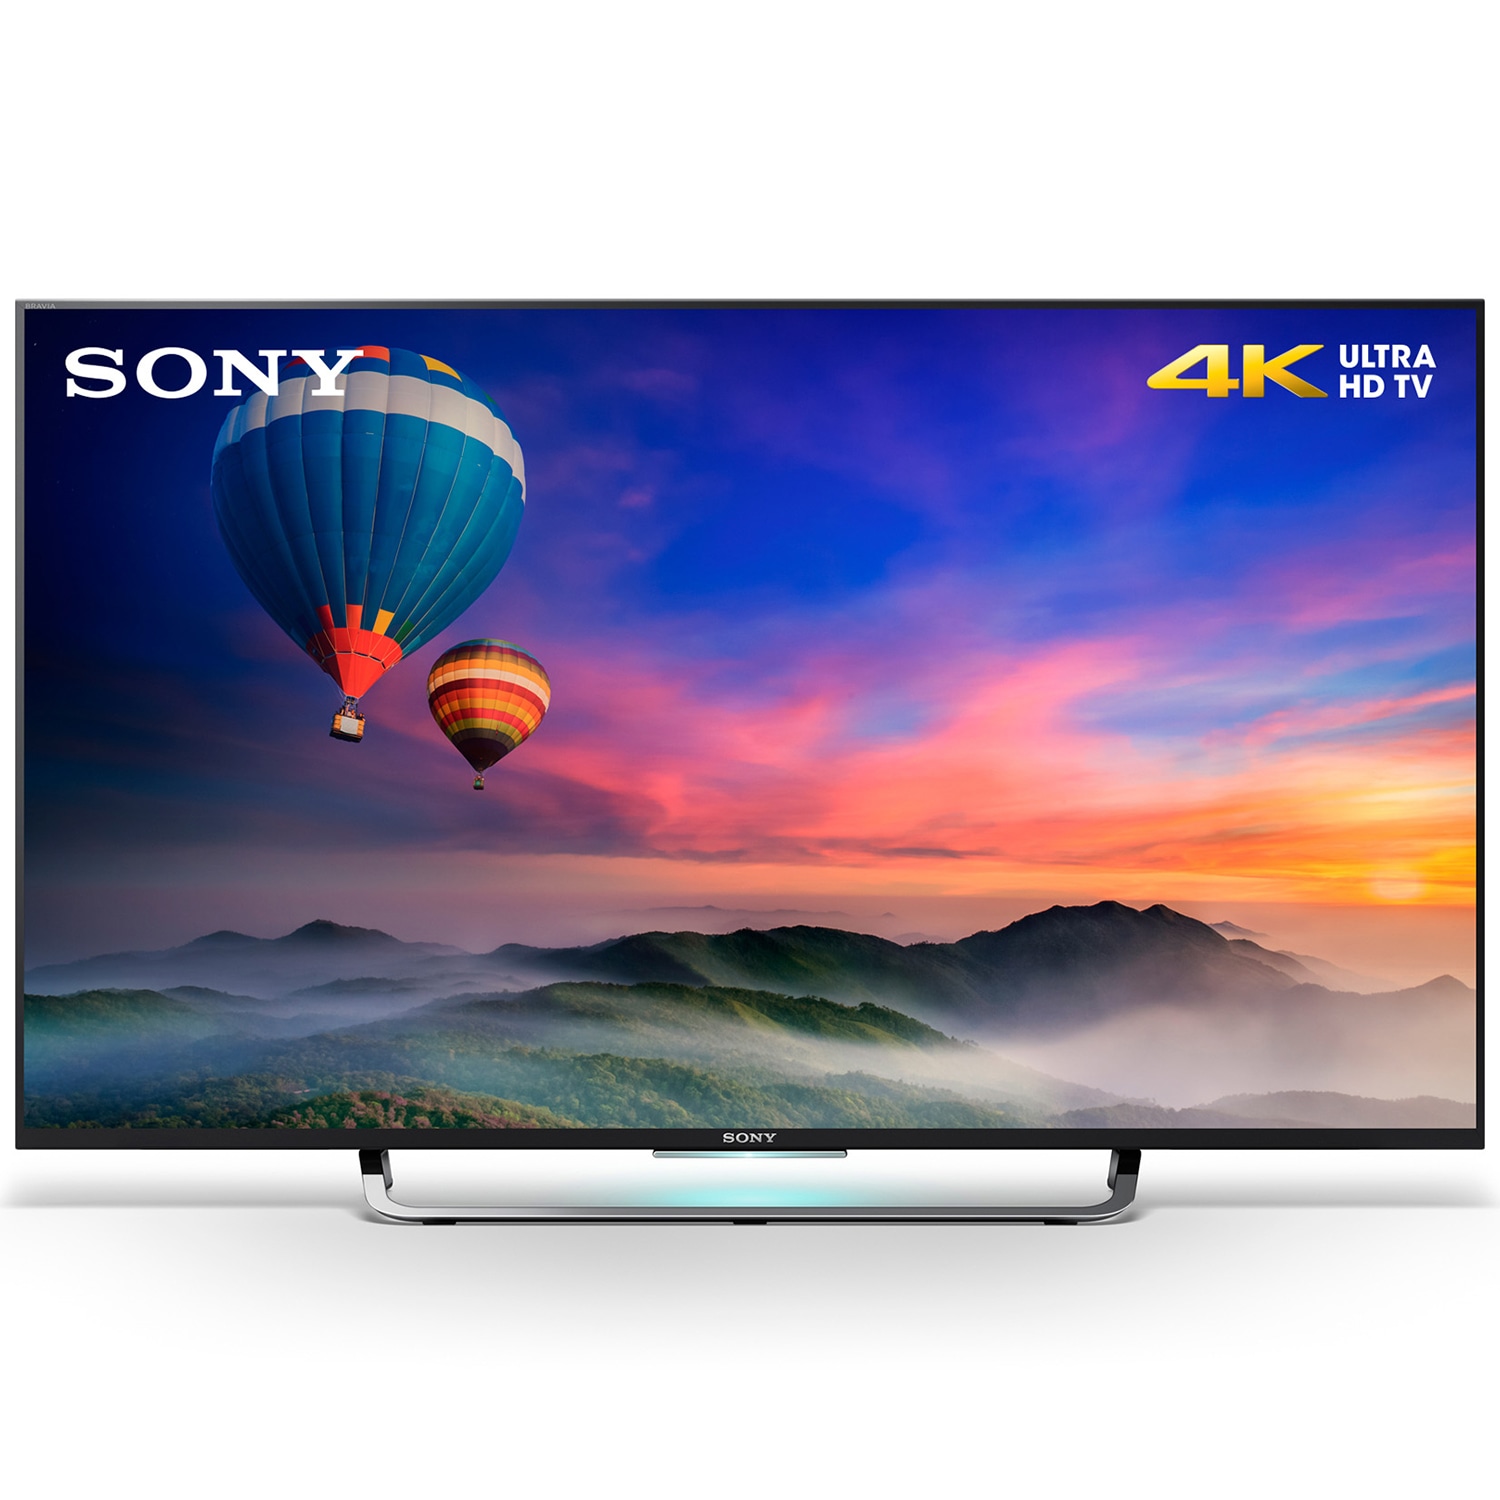 Sony 49" Class Slim 4K Ultra HD LED Smart TV | PCRichard.com | XBR49X830C